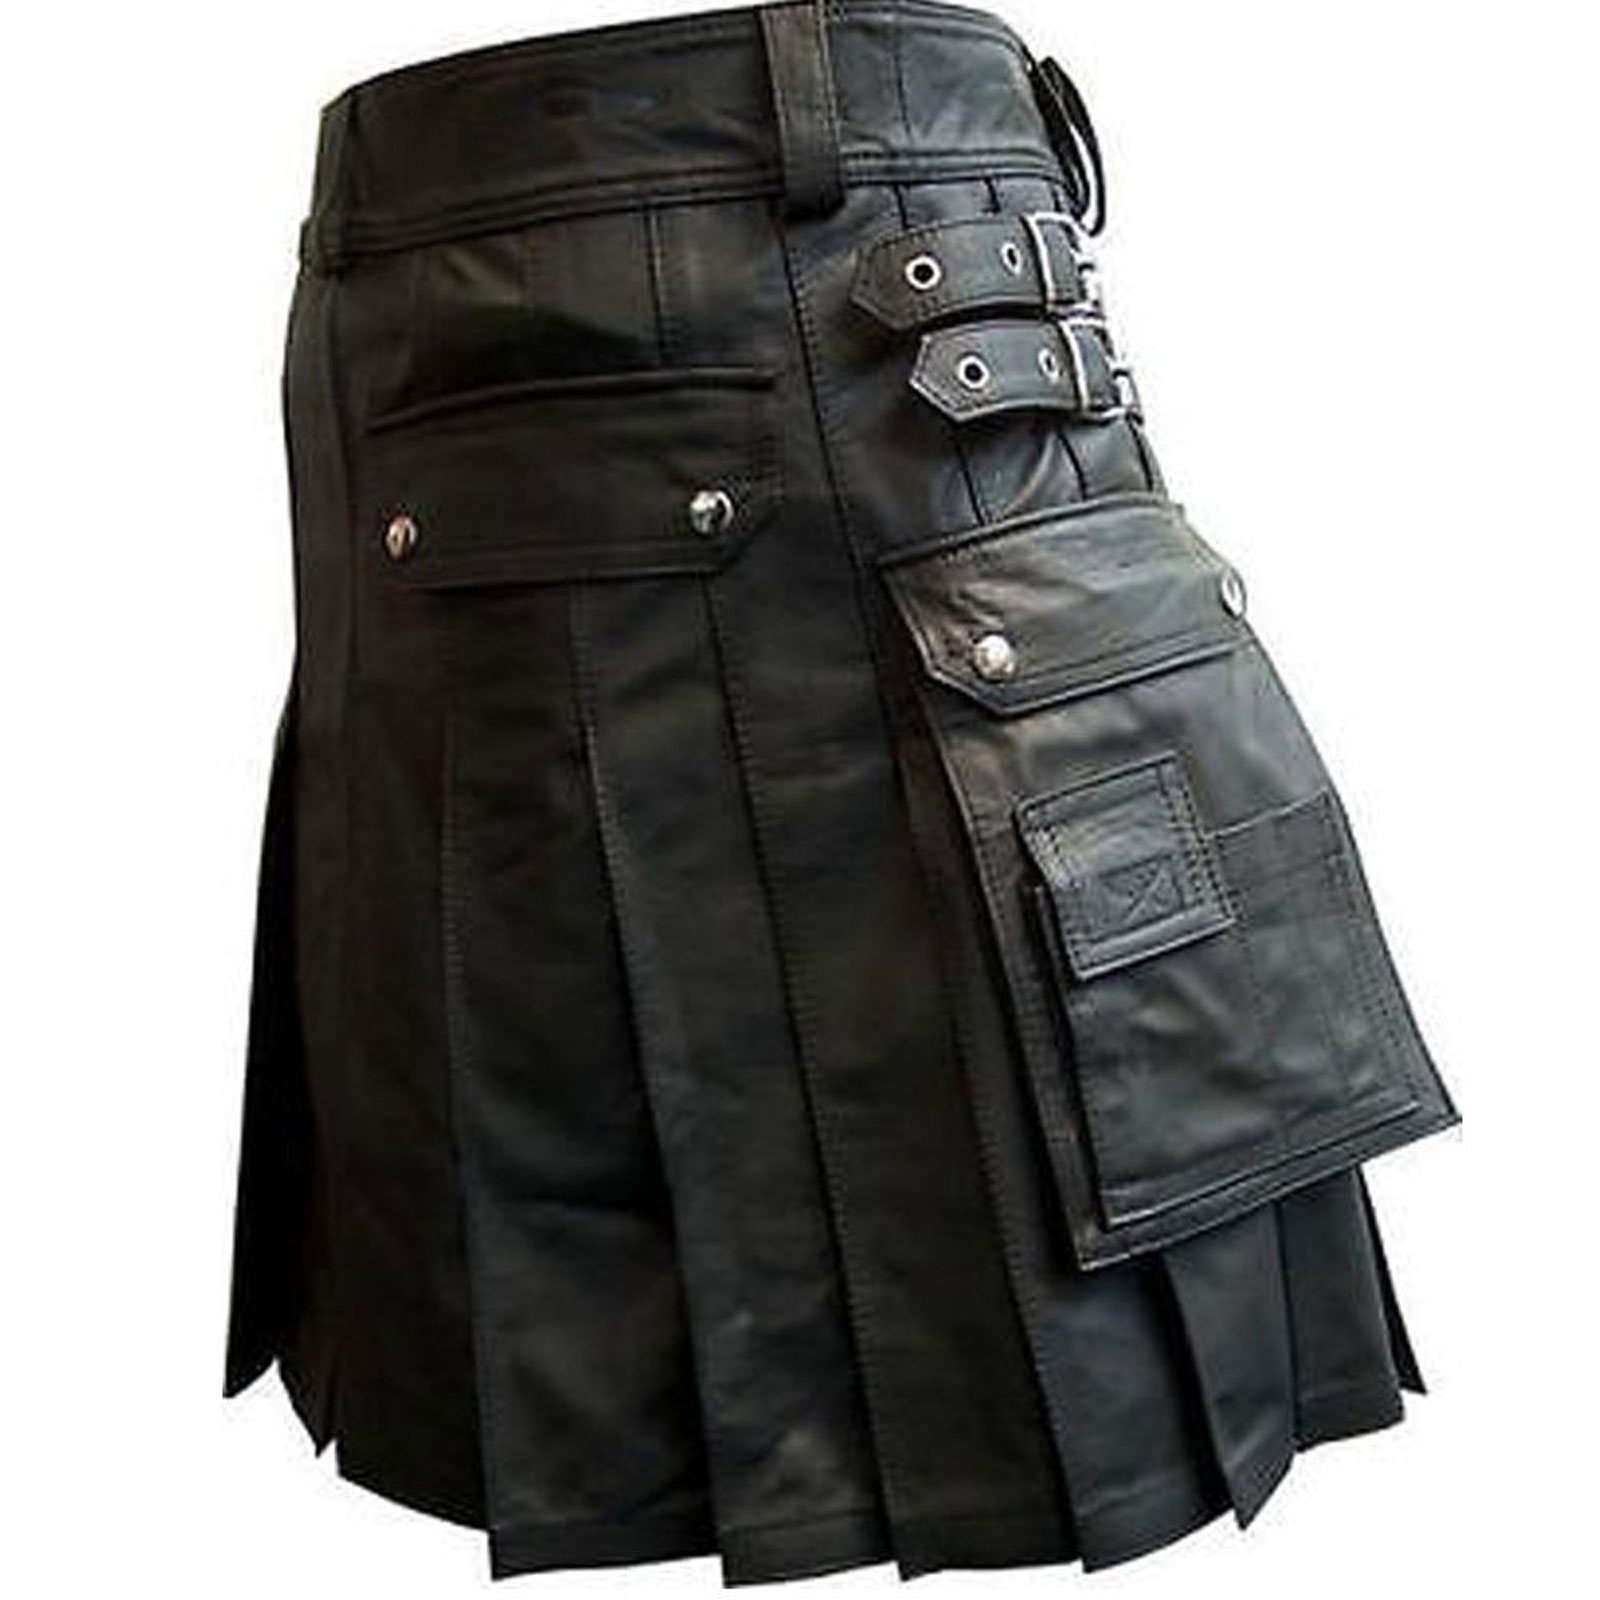 Stylish Black Leather Kilt with Twin Cargo Pockets